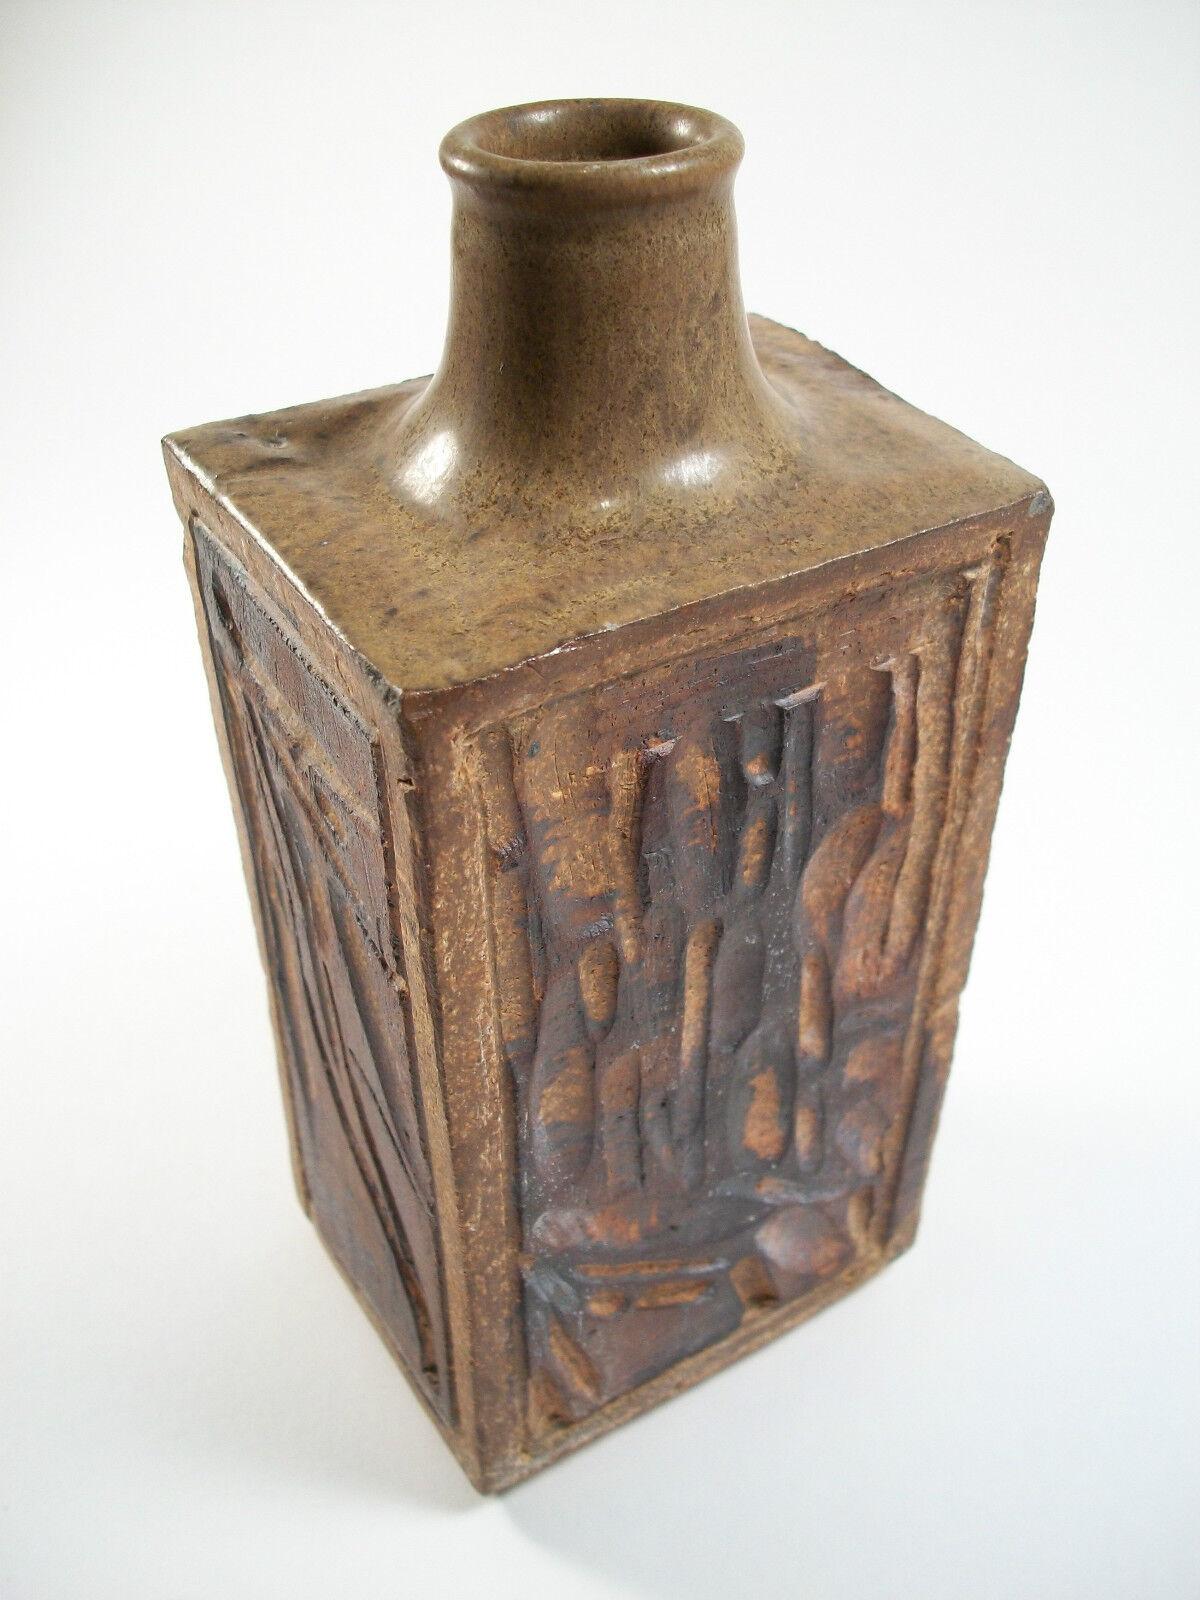 VILT - Cut-Sided & Glazed Stoneware Studio Pottery Vase - Signed - 20th Century For Sale 2